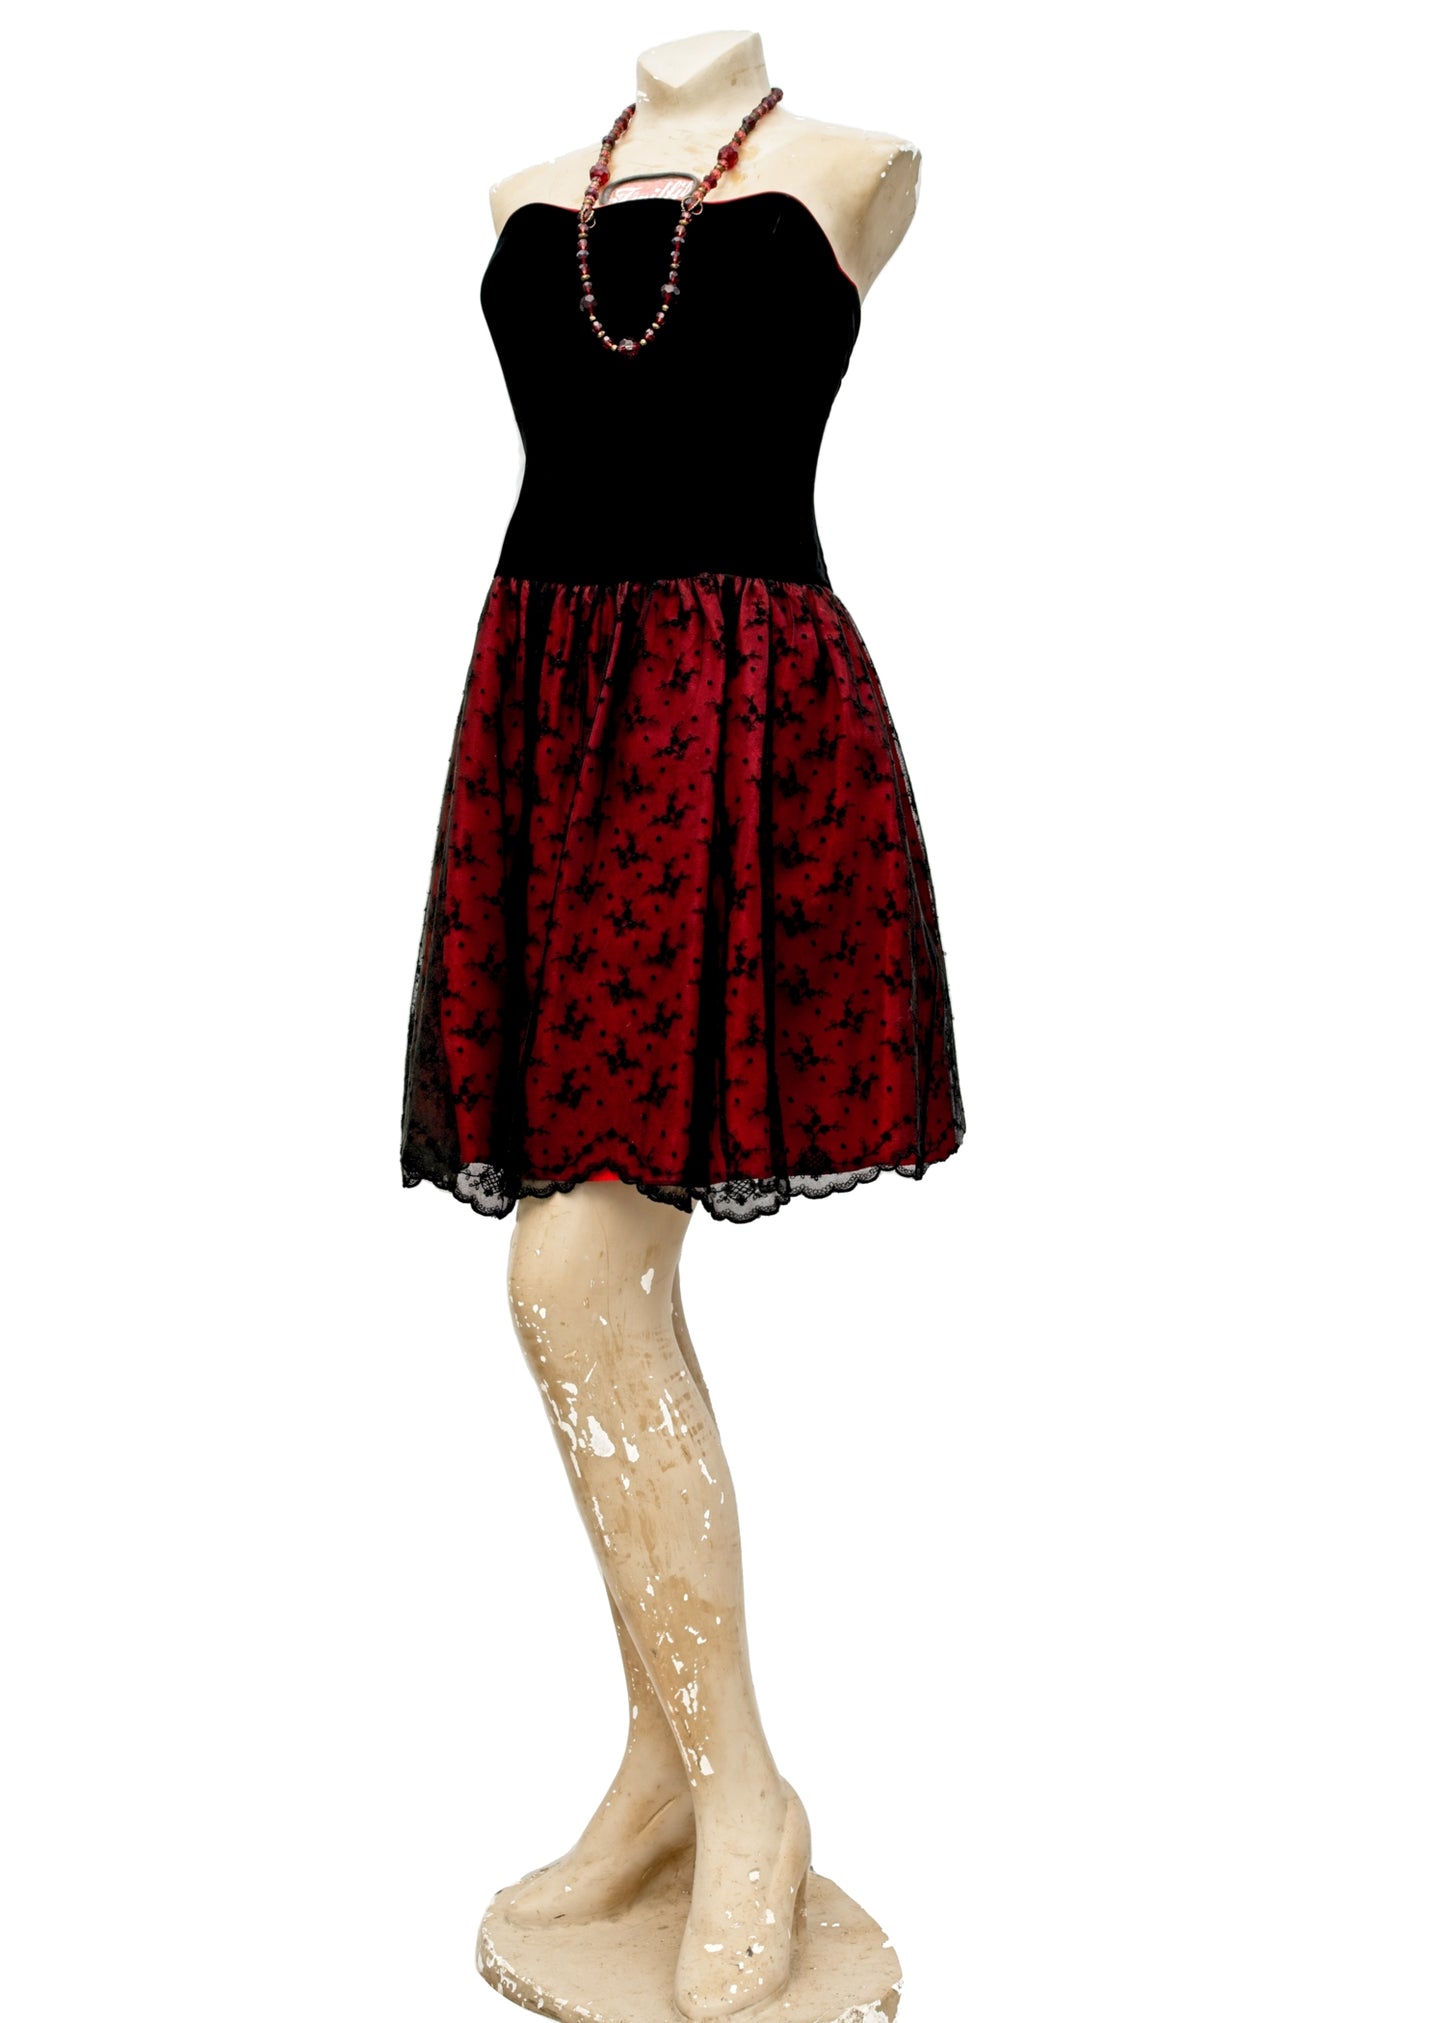 Vintage Laura Ashley Black and Red Strapless Cocktail Dress • Velvet Lace • UK12